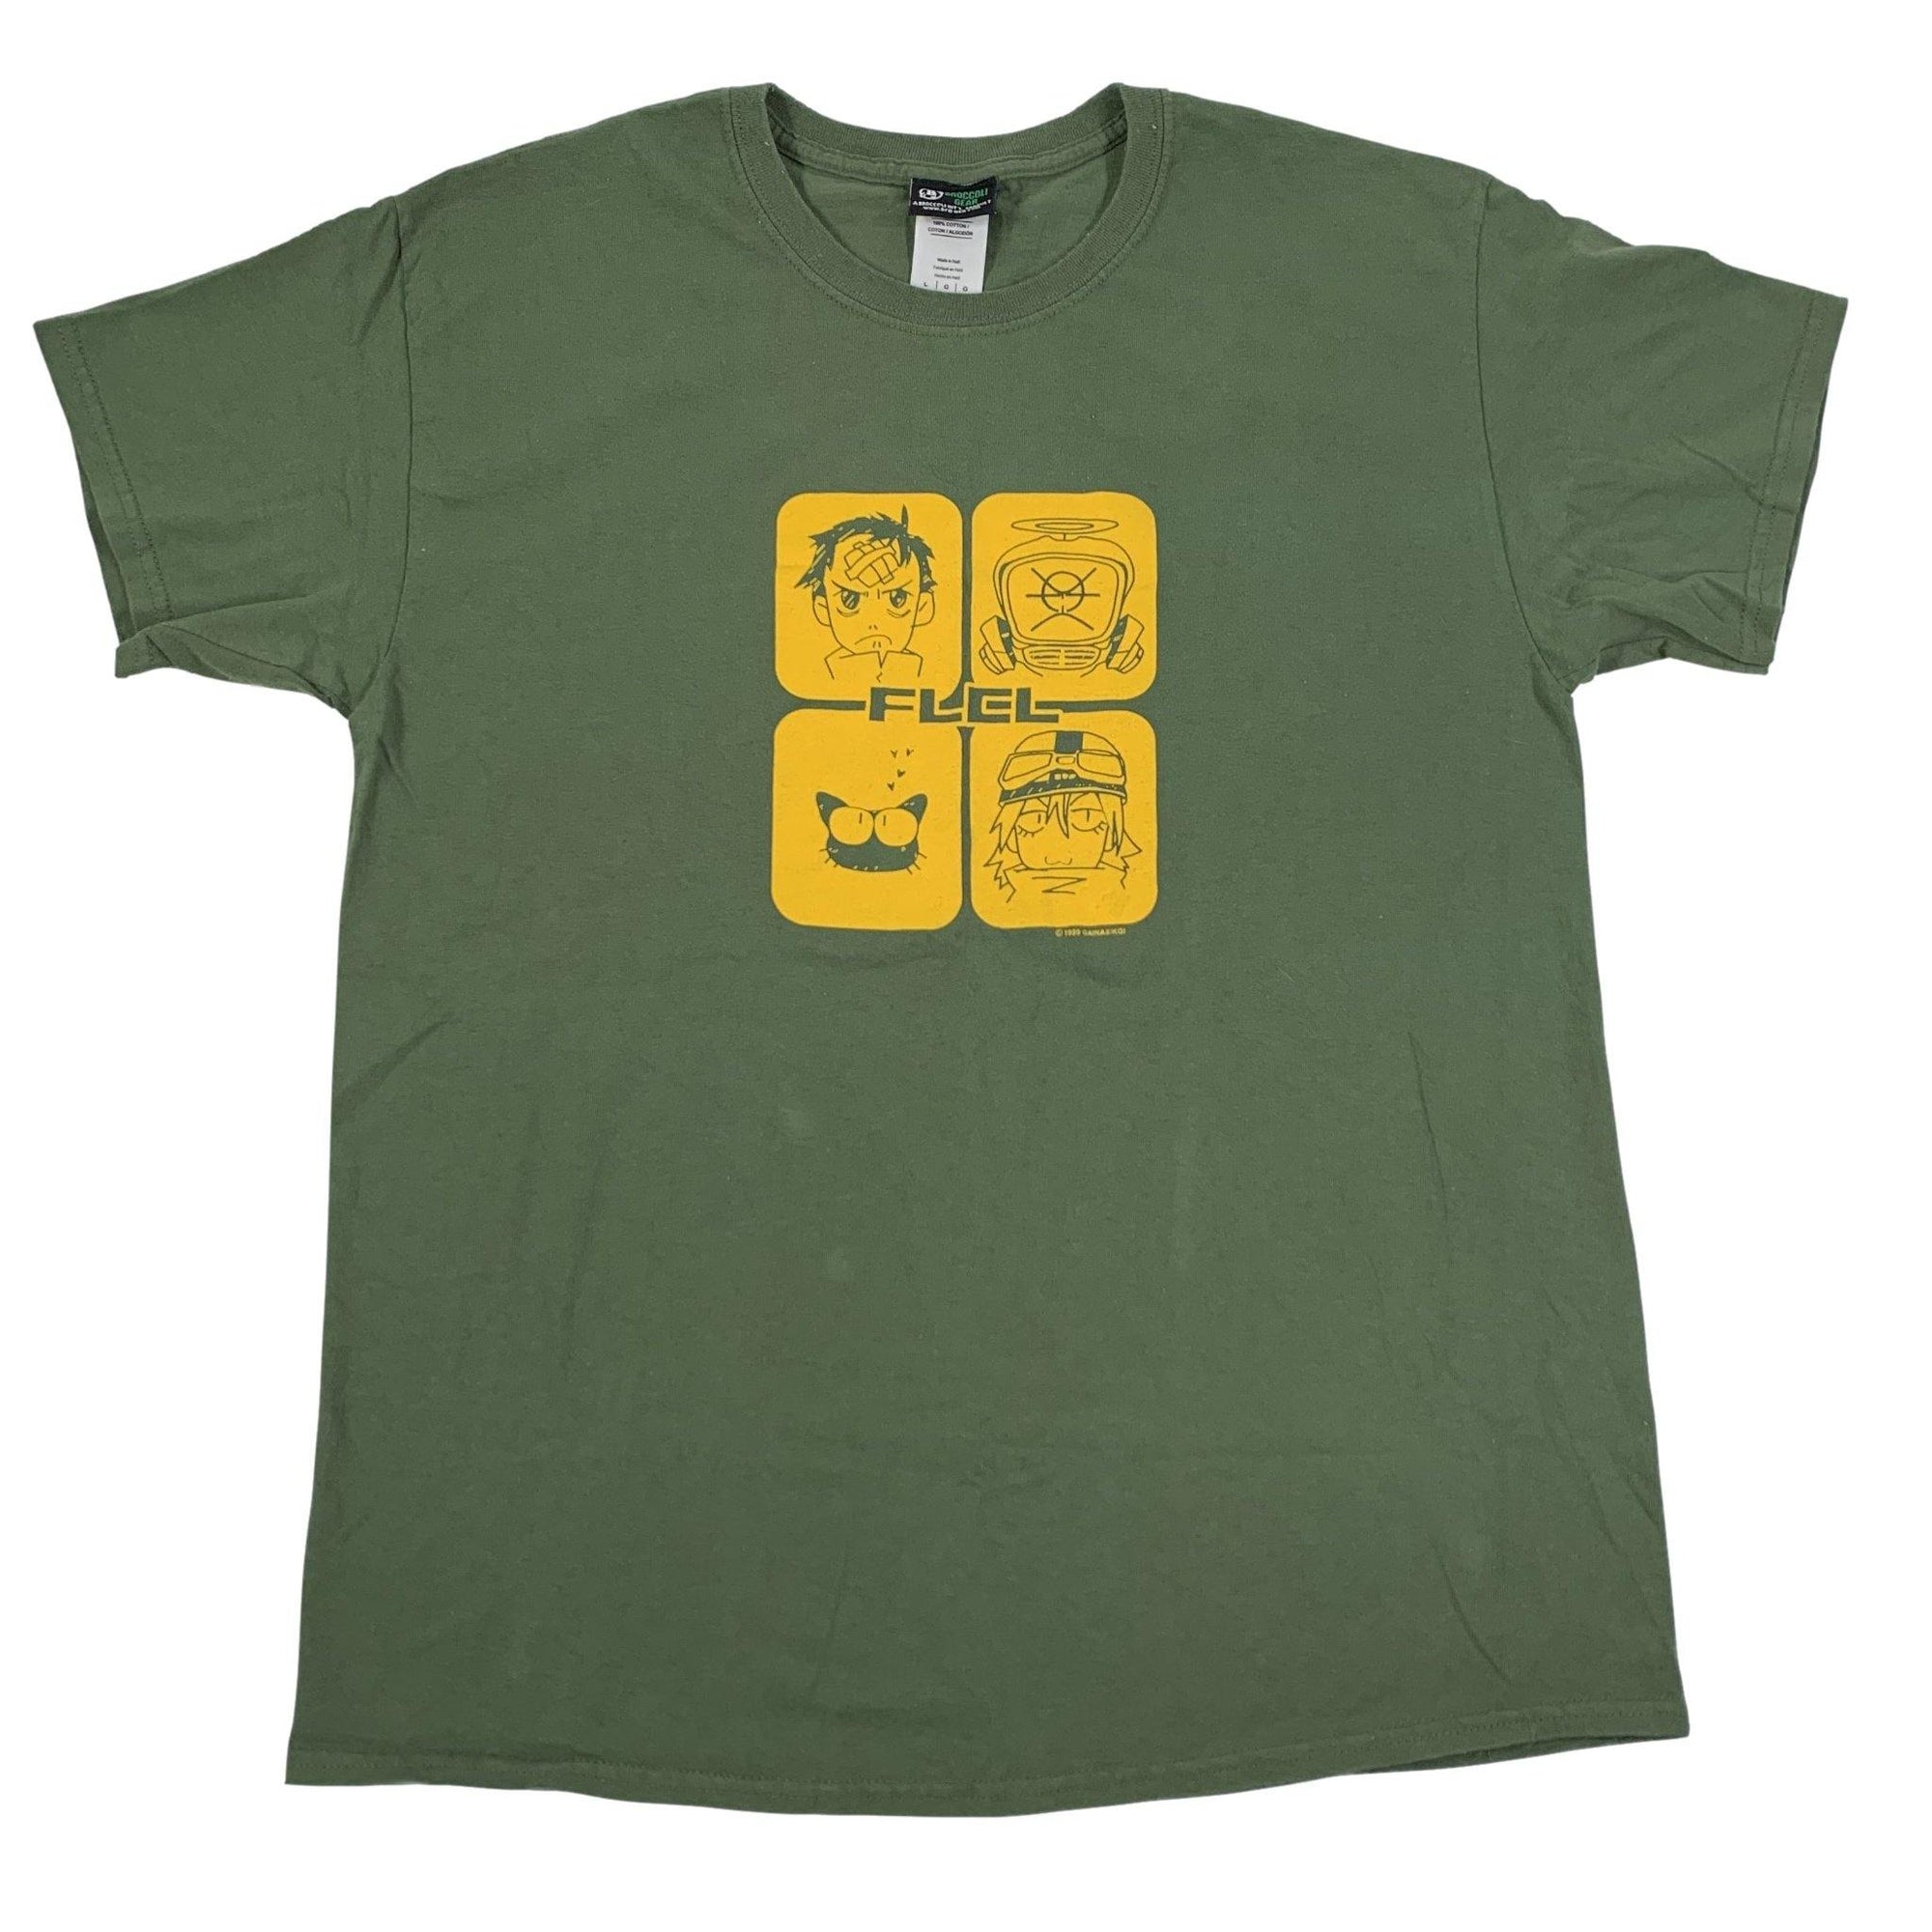 Vintage FLCL "1999" T-Shirt - jointcustodydc